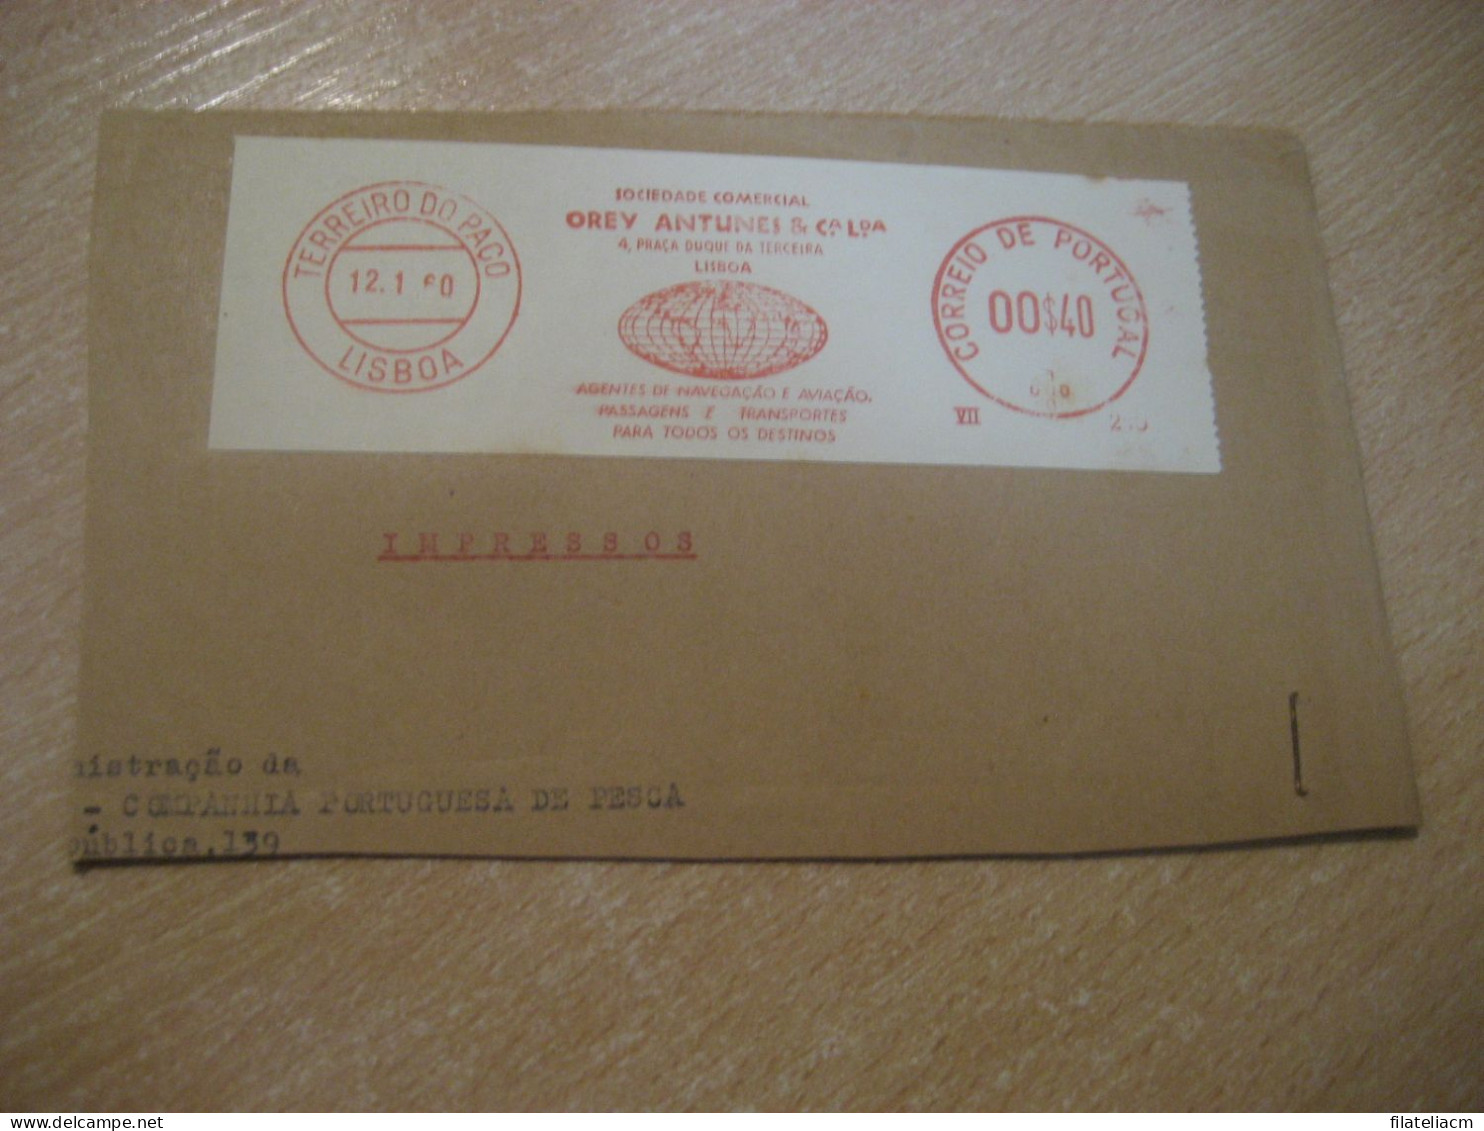 LISBOA 1960 Orey Antunes Agentes De Navegaçao E Aviaçao Meter Mail Cancel Cut Cuted Cover PORTUGAL - Covers & Documents